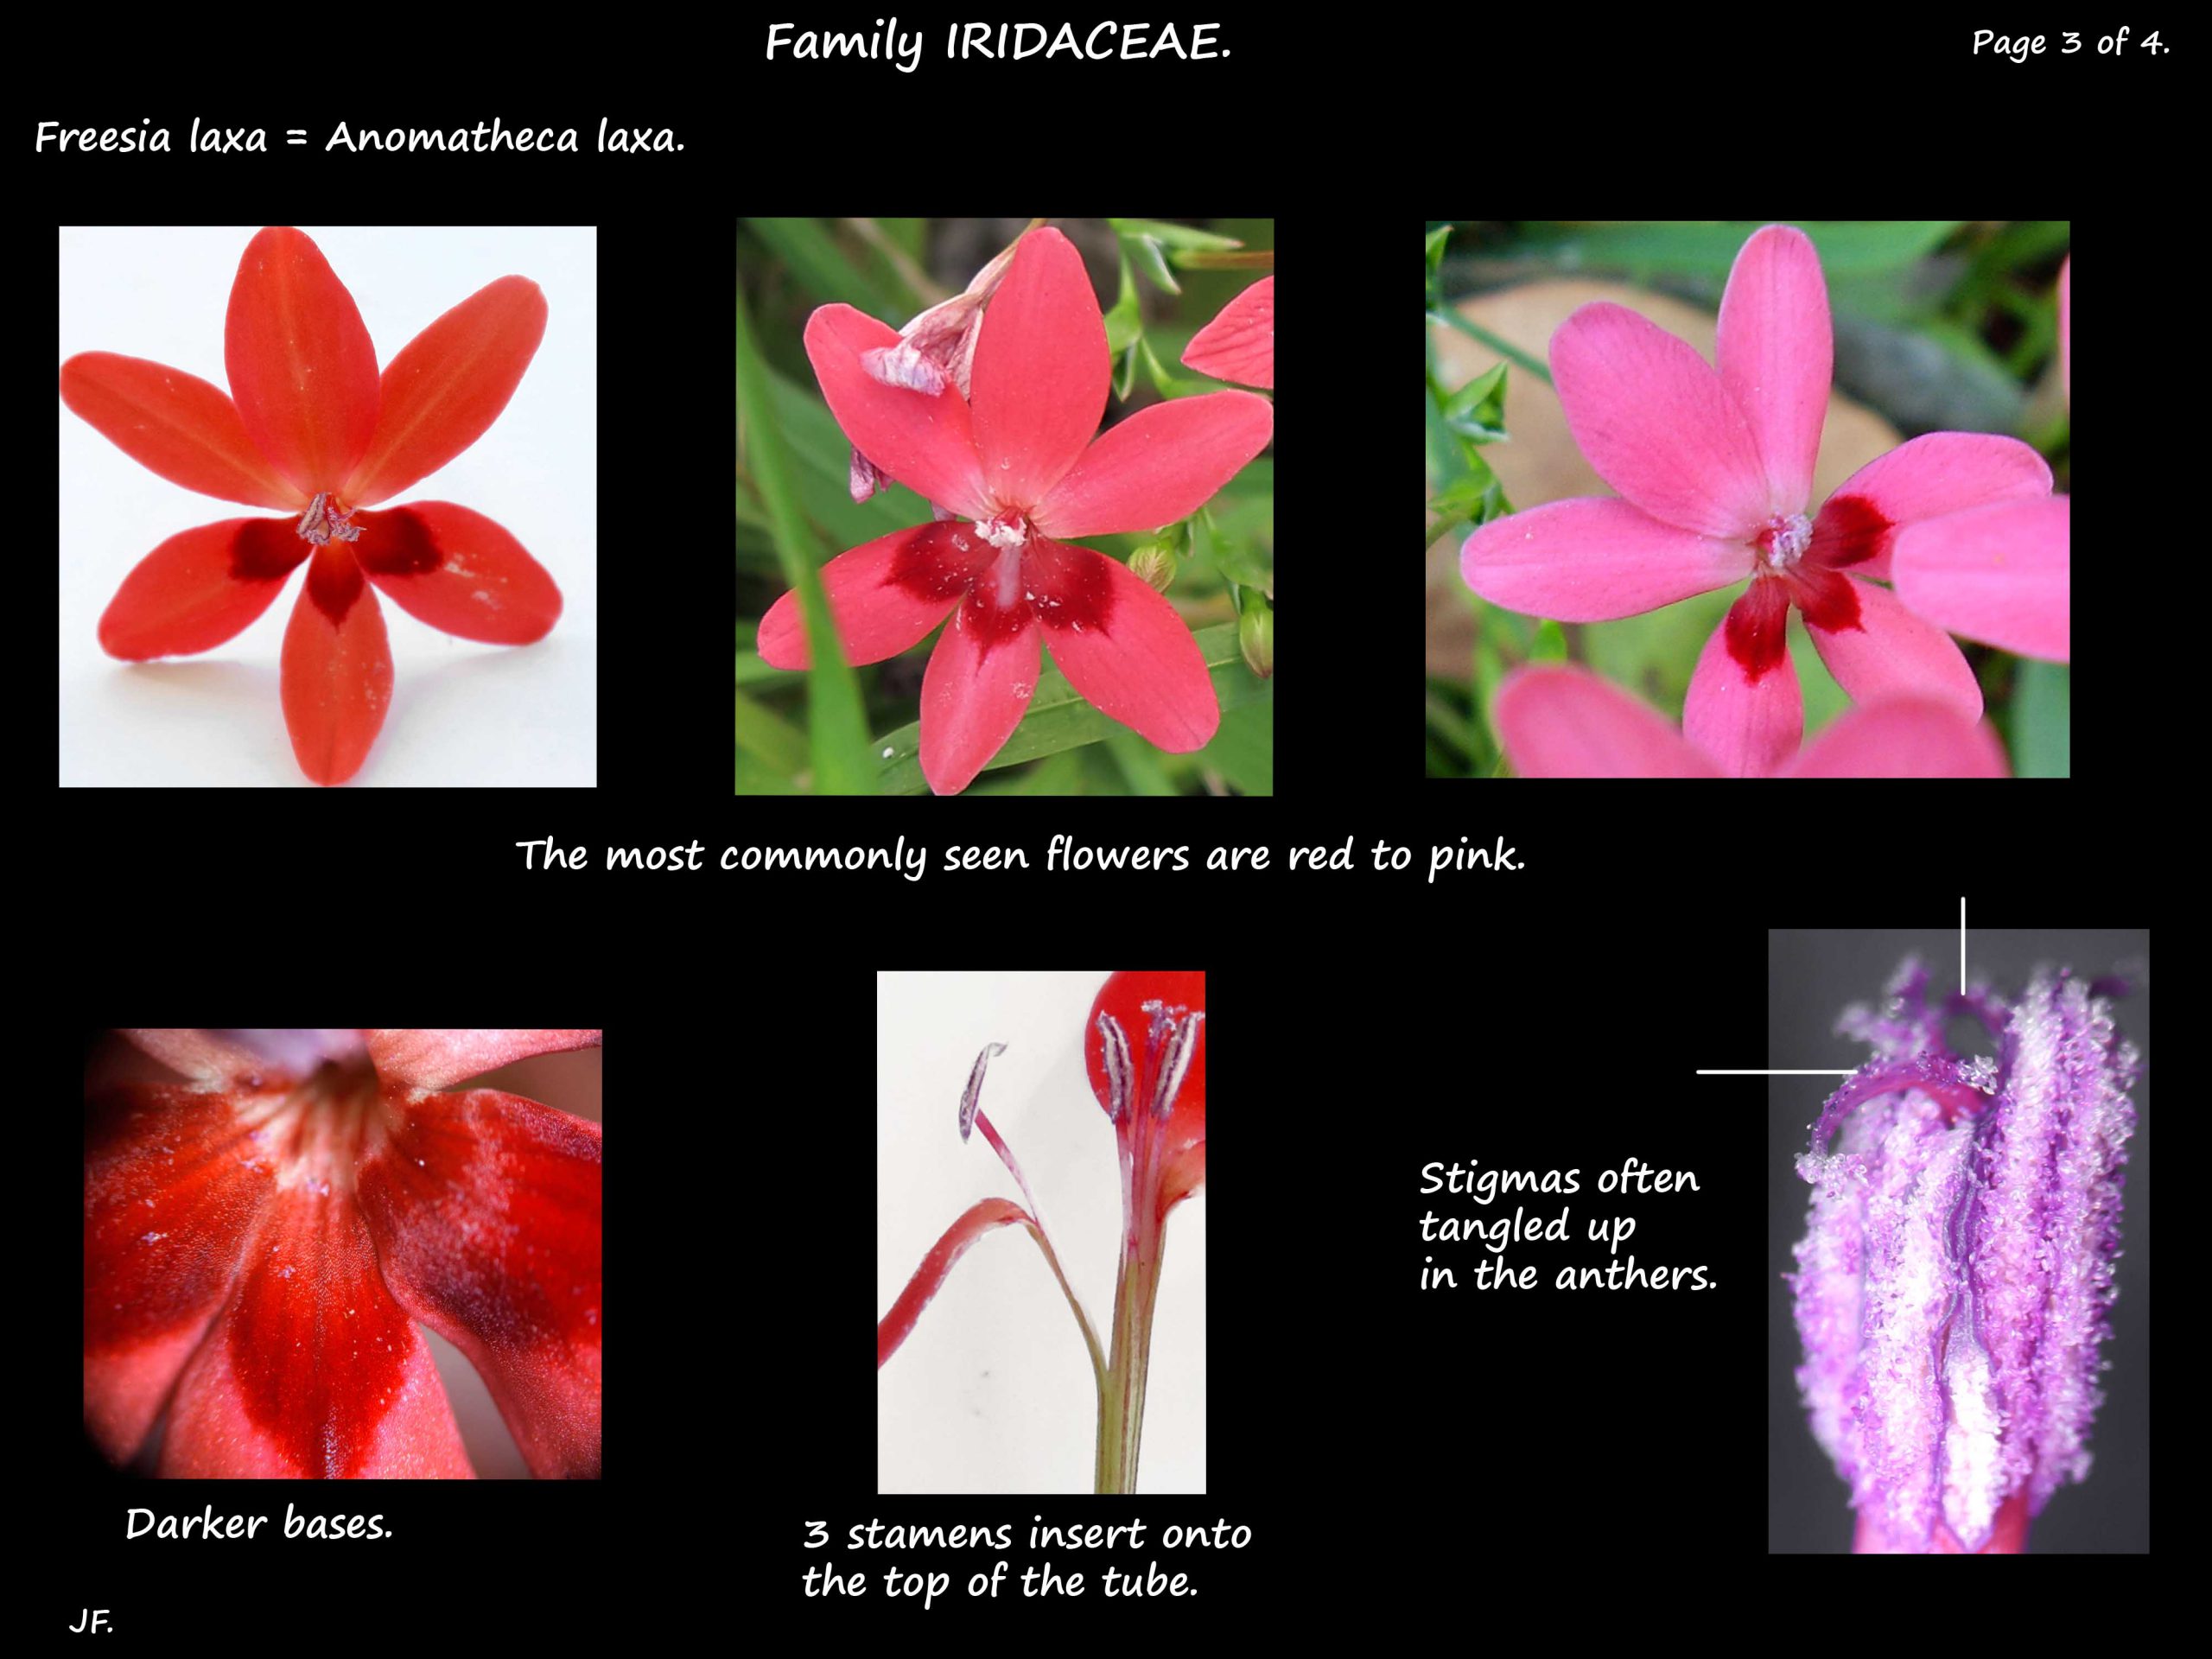 3 Flowers of Freesia laxa